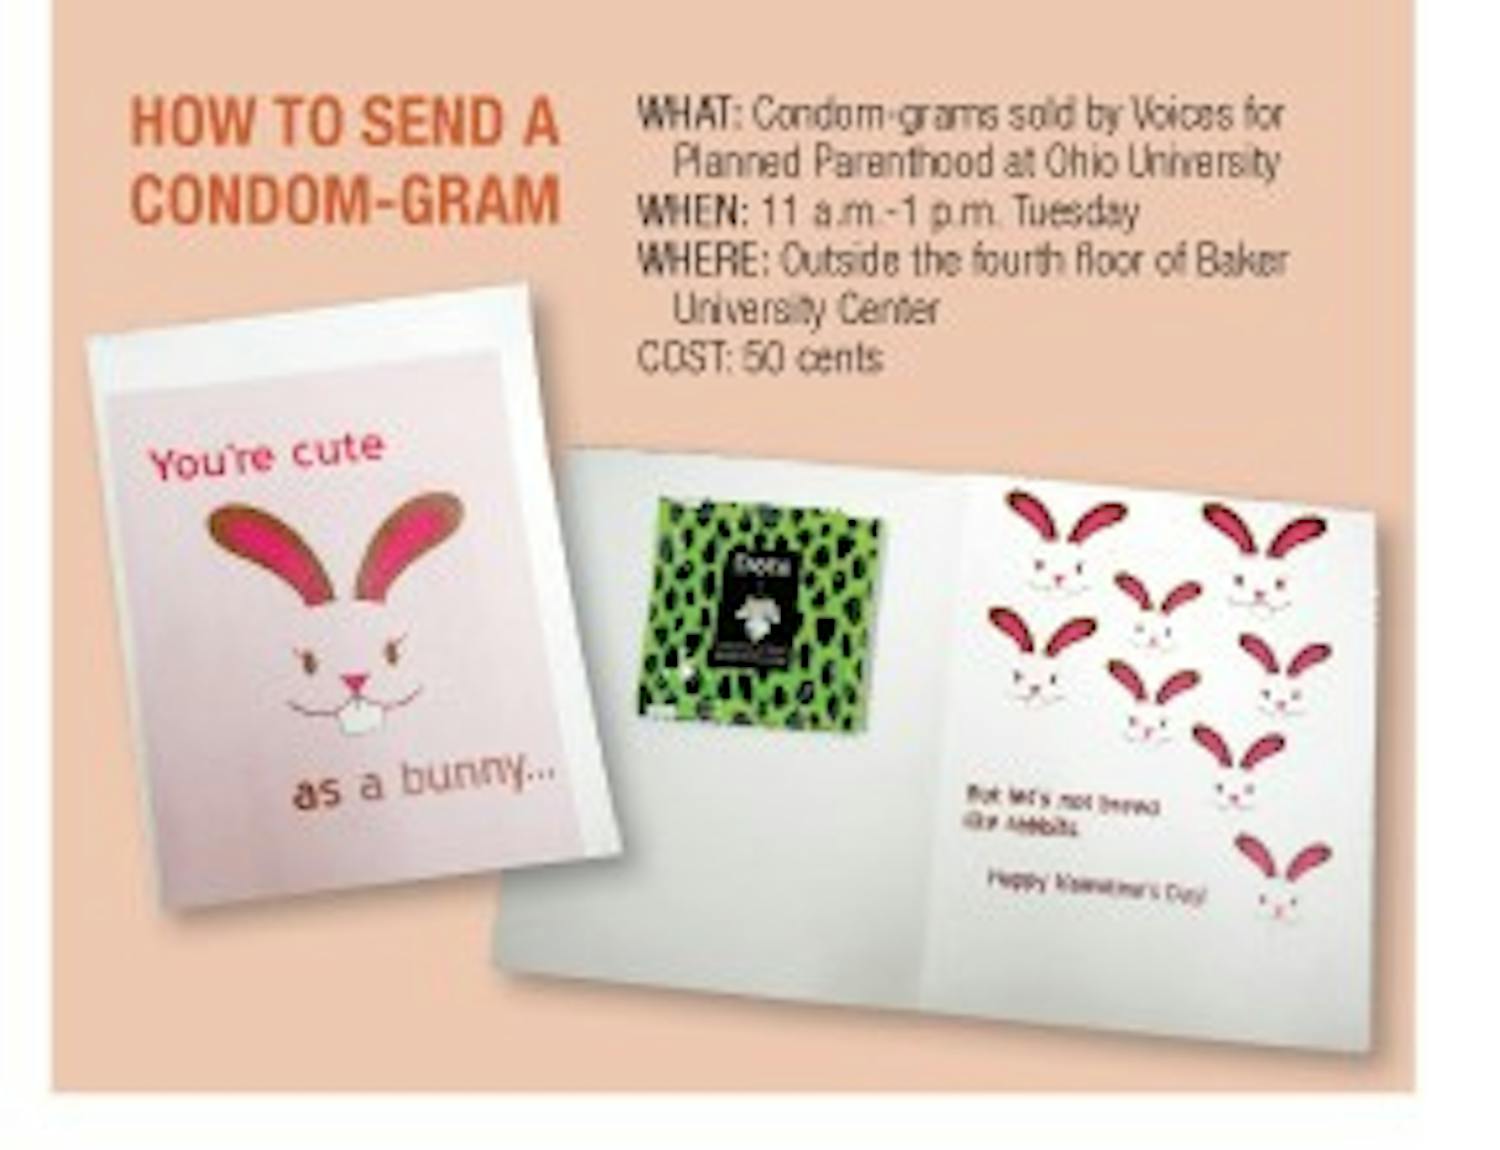 Condom cards promote safe V-Day sex  